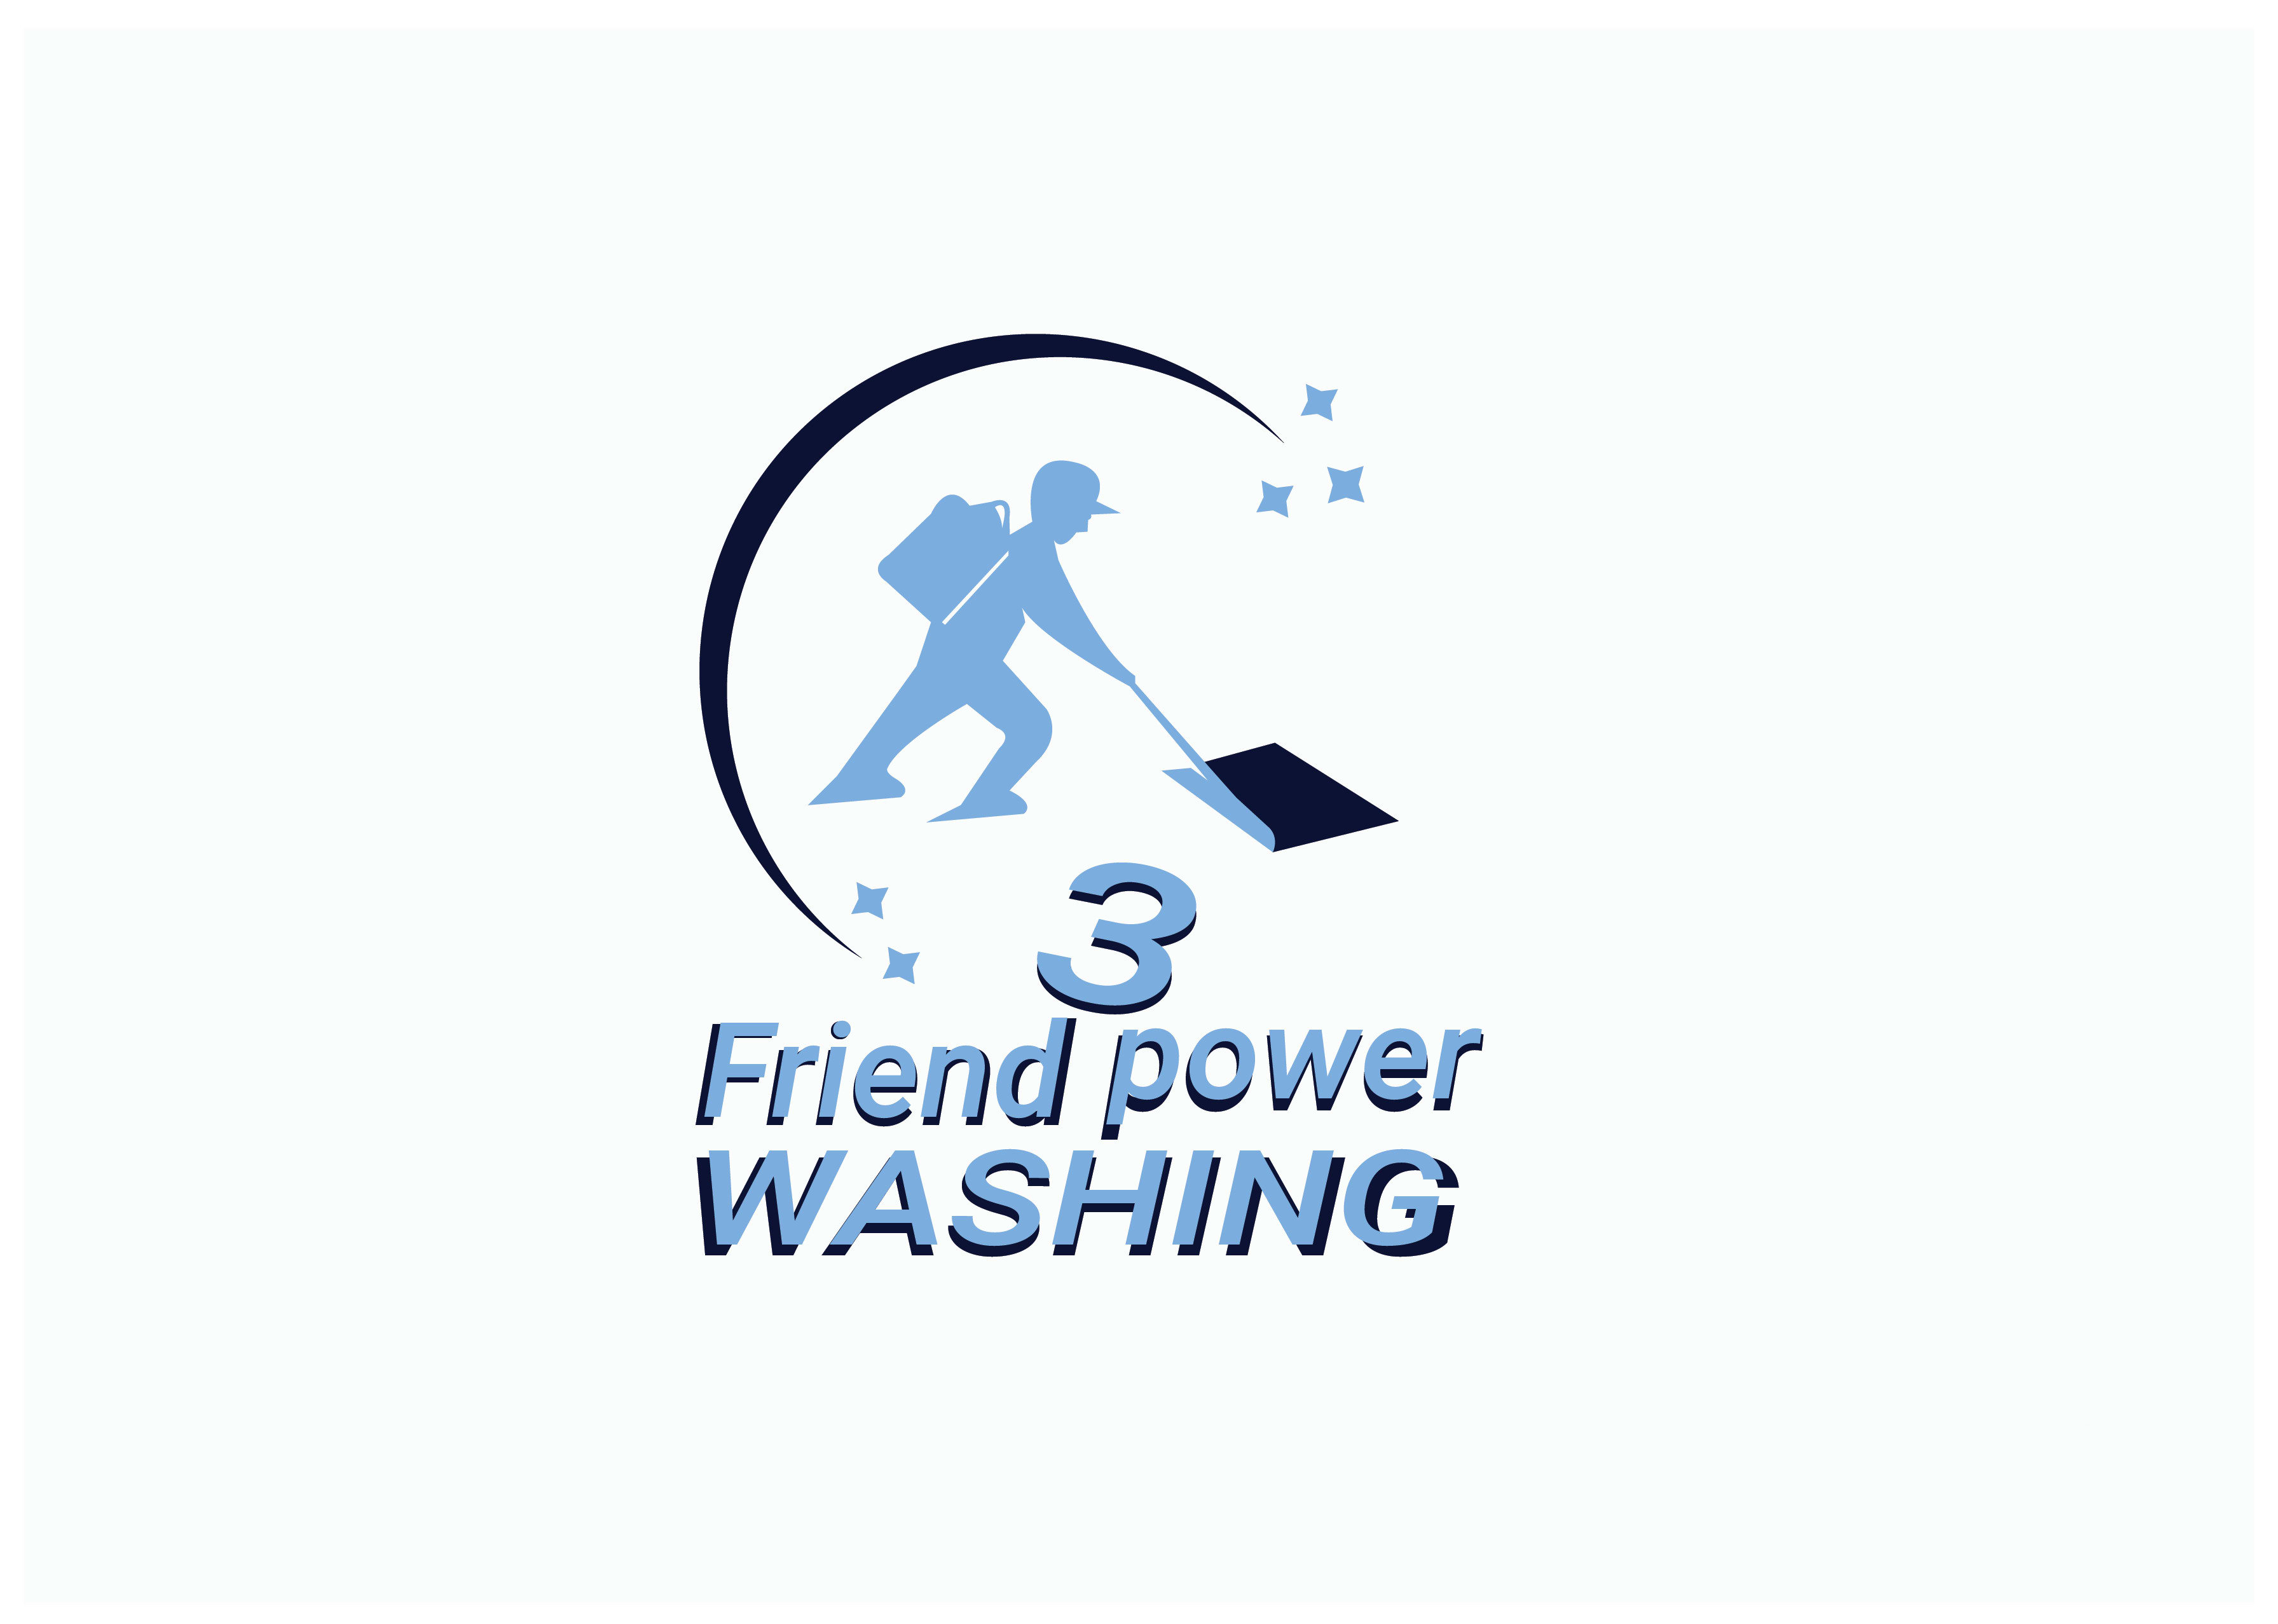 pressure washing logo template